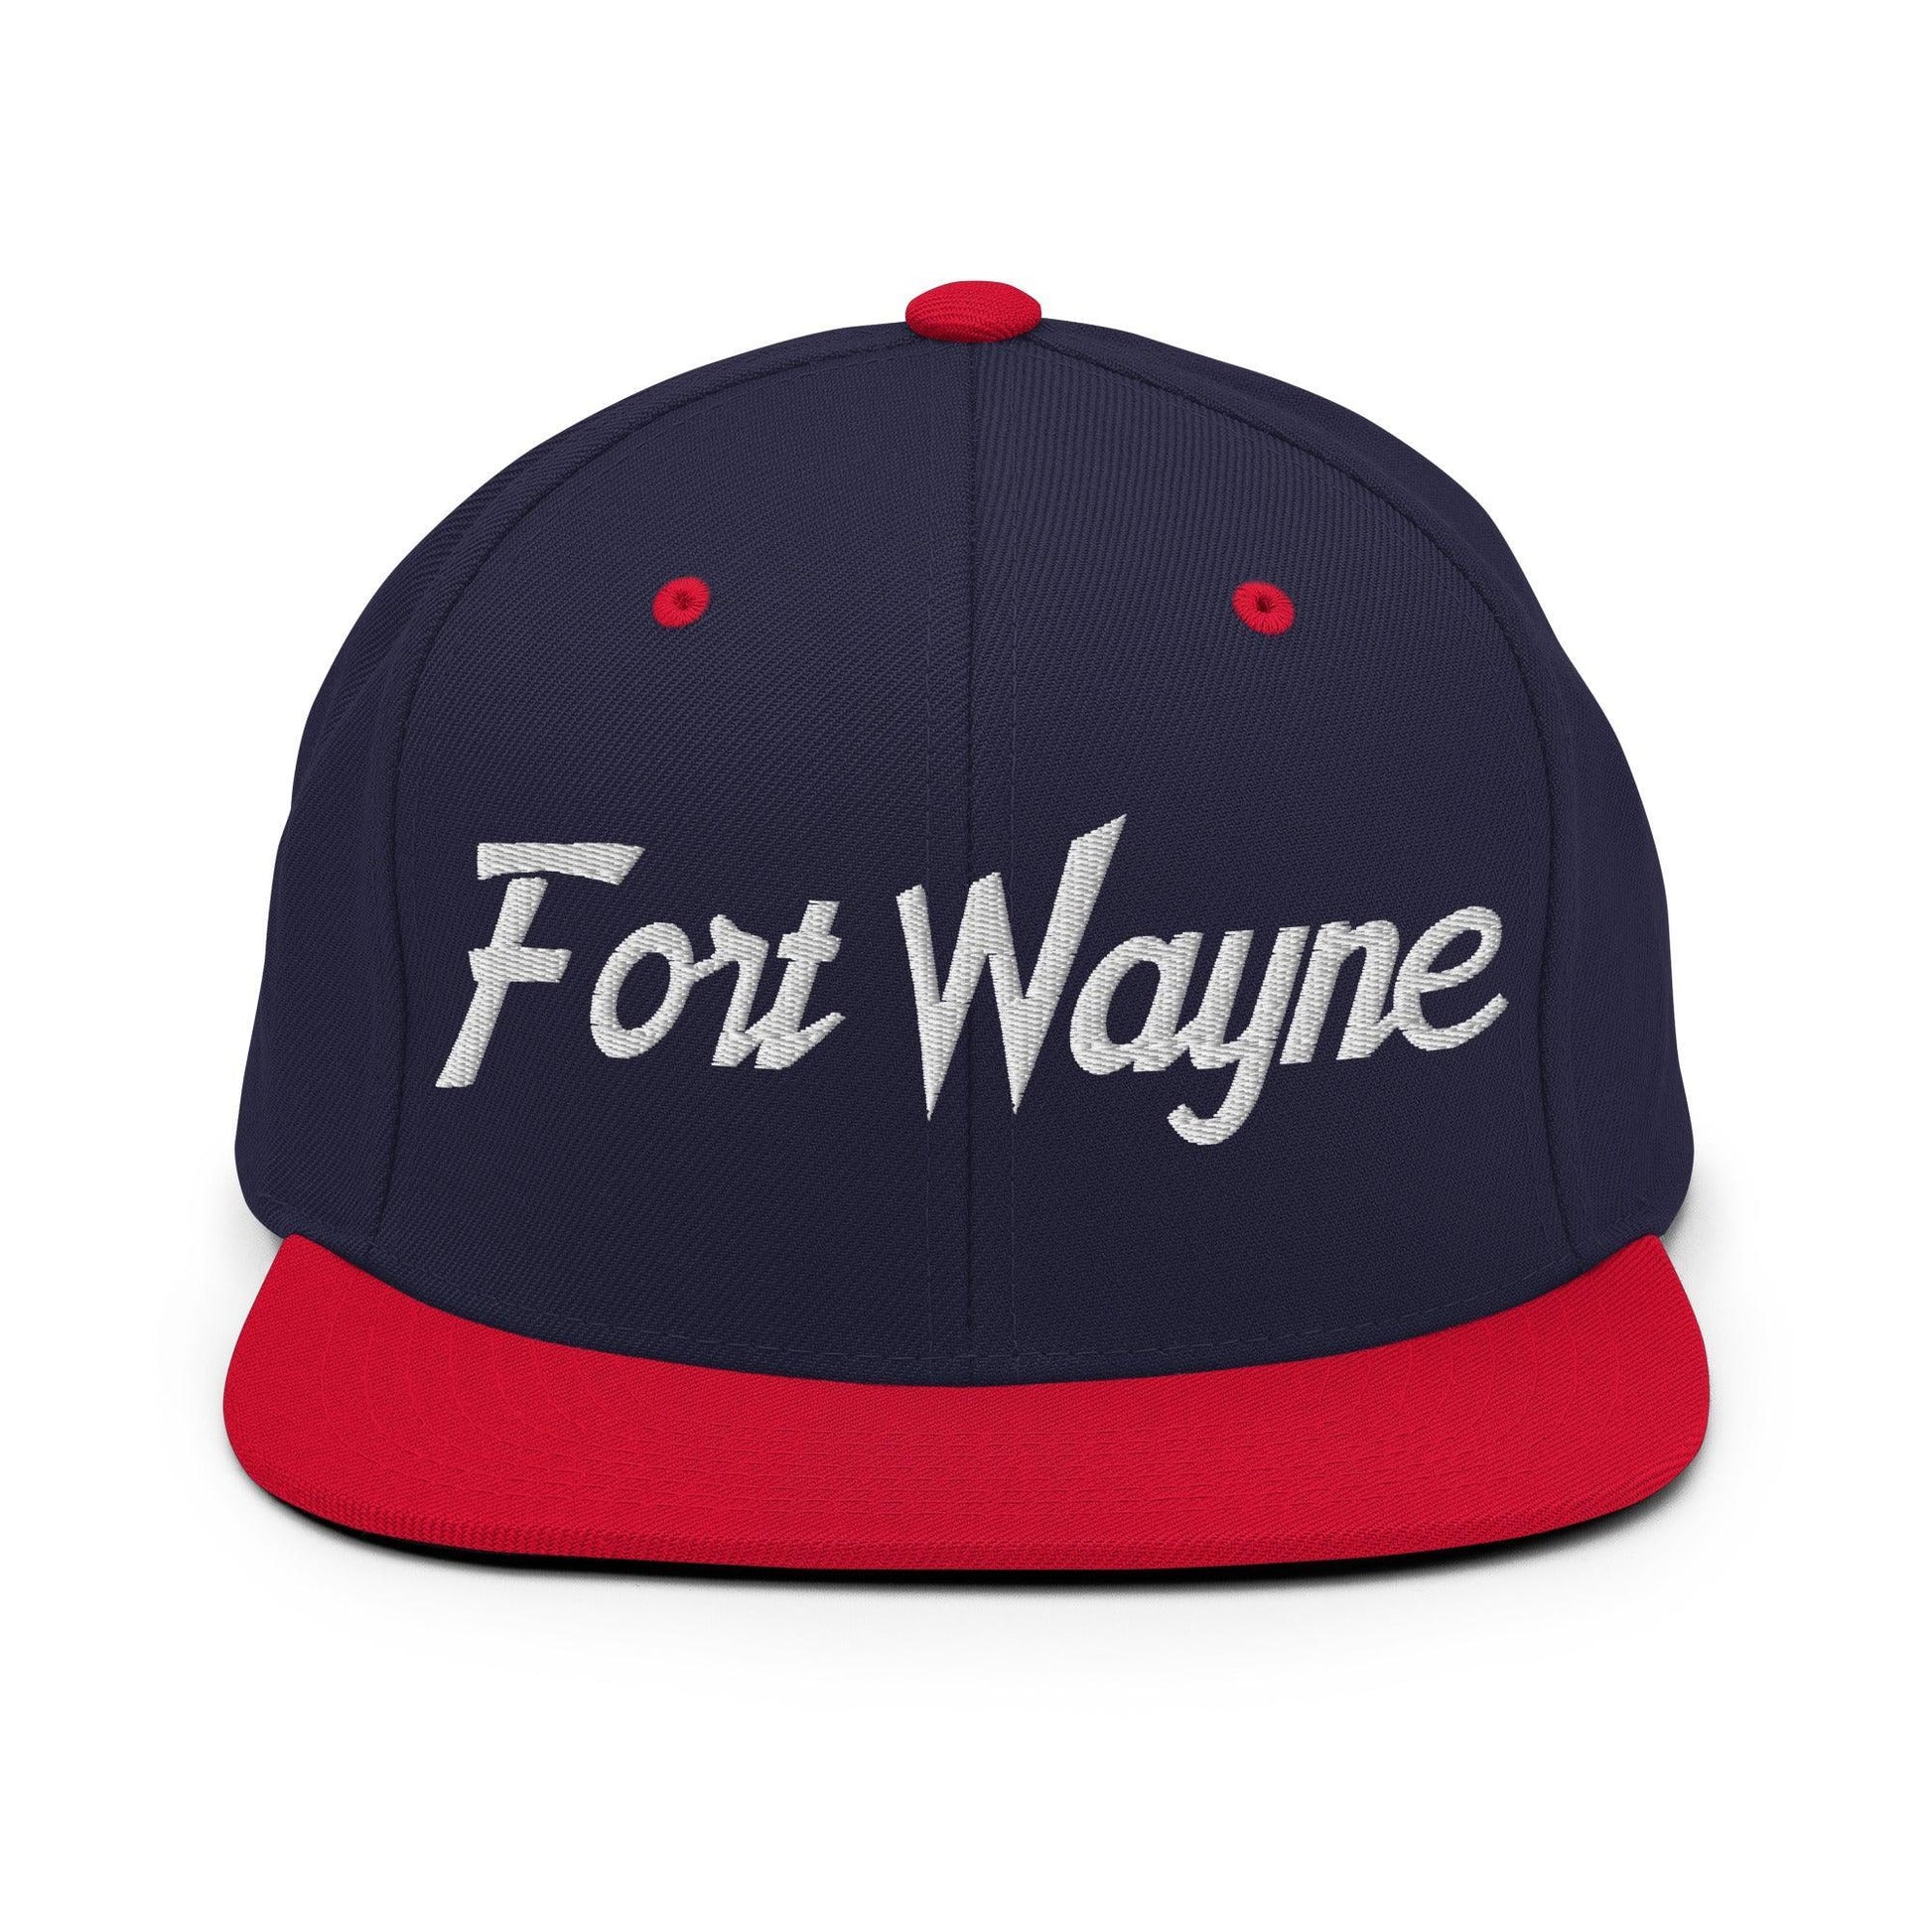 Fort Wayne Script Snapback Hat Navy/ Red